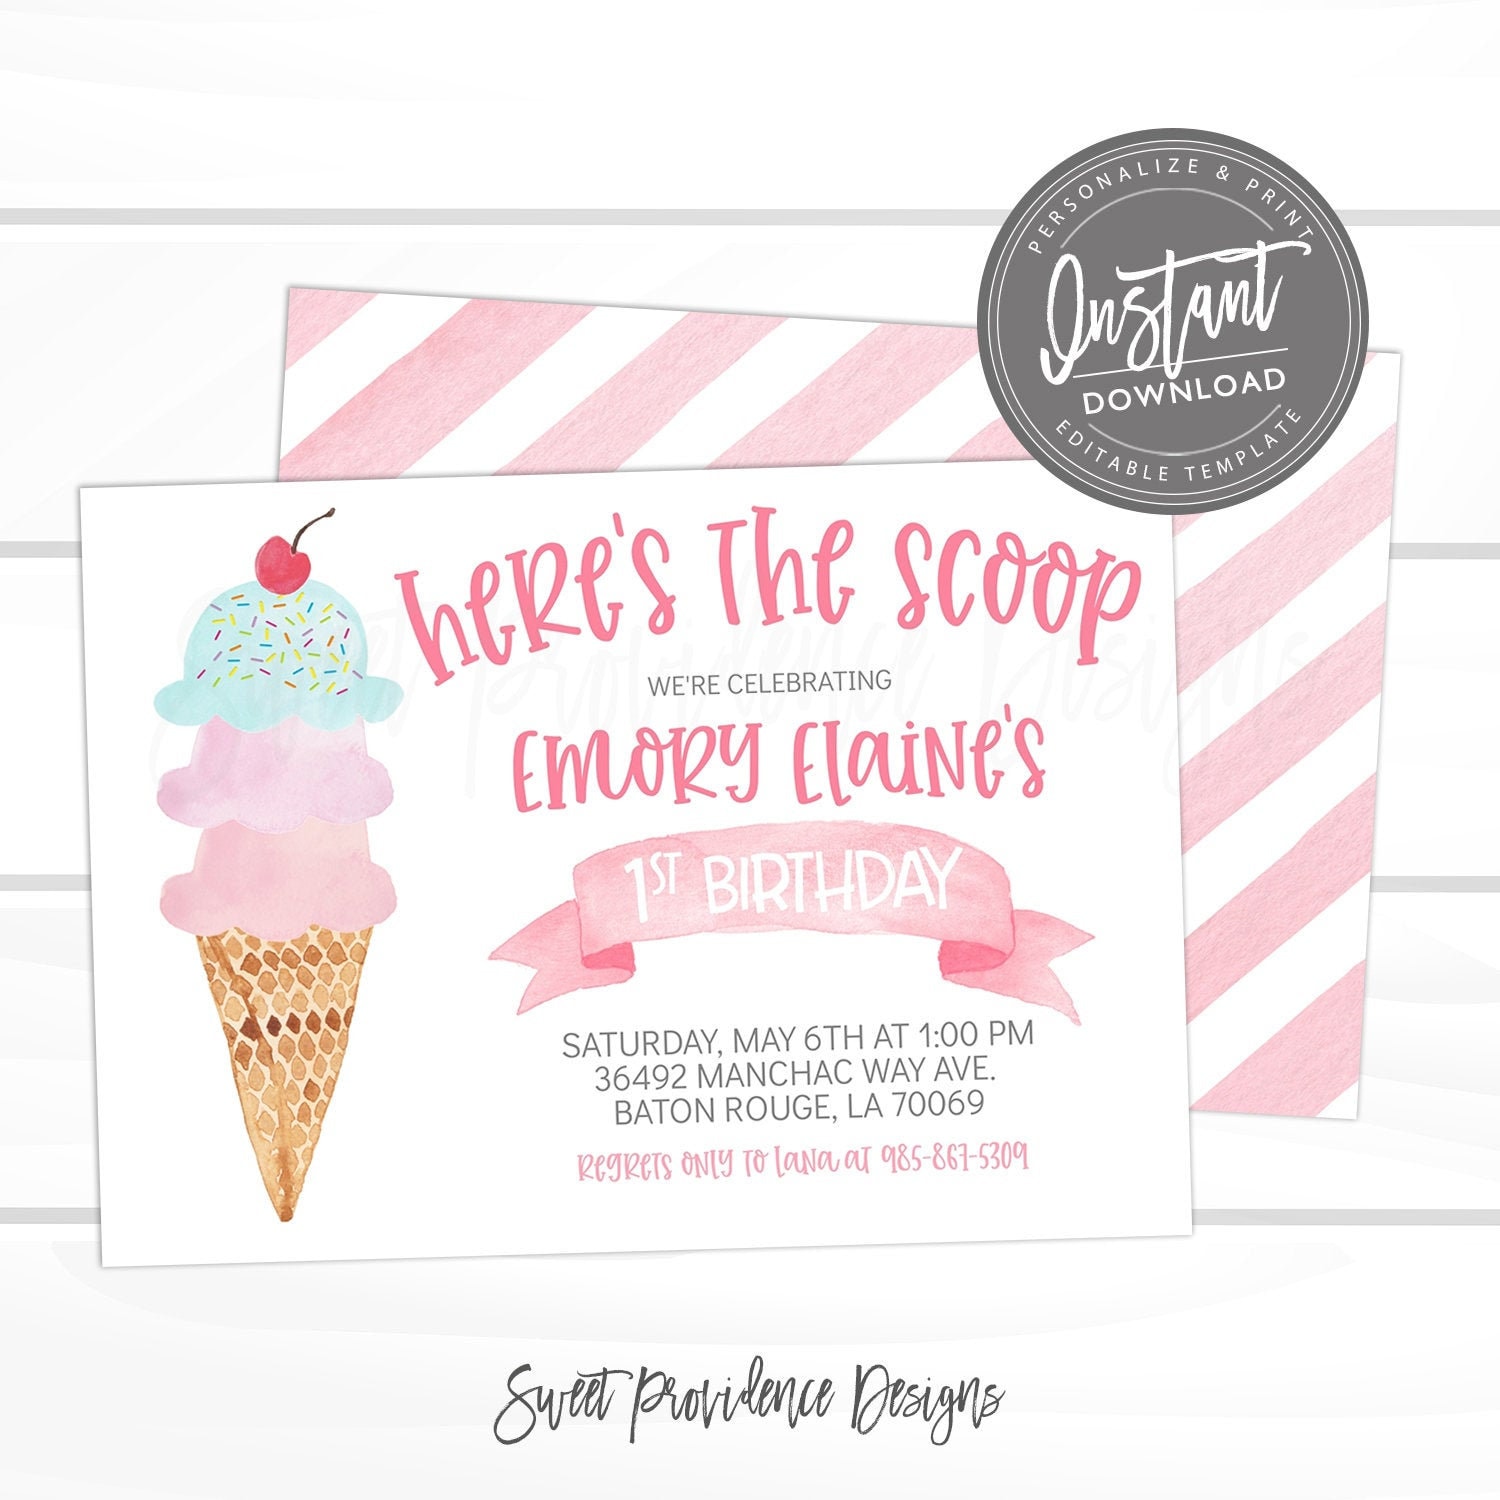 Editable Invitation Template Birthday Invitation Pop on Over Ice Cream Watercolor Popsicle